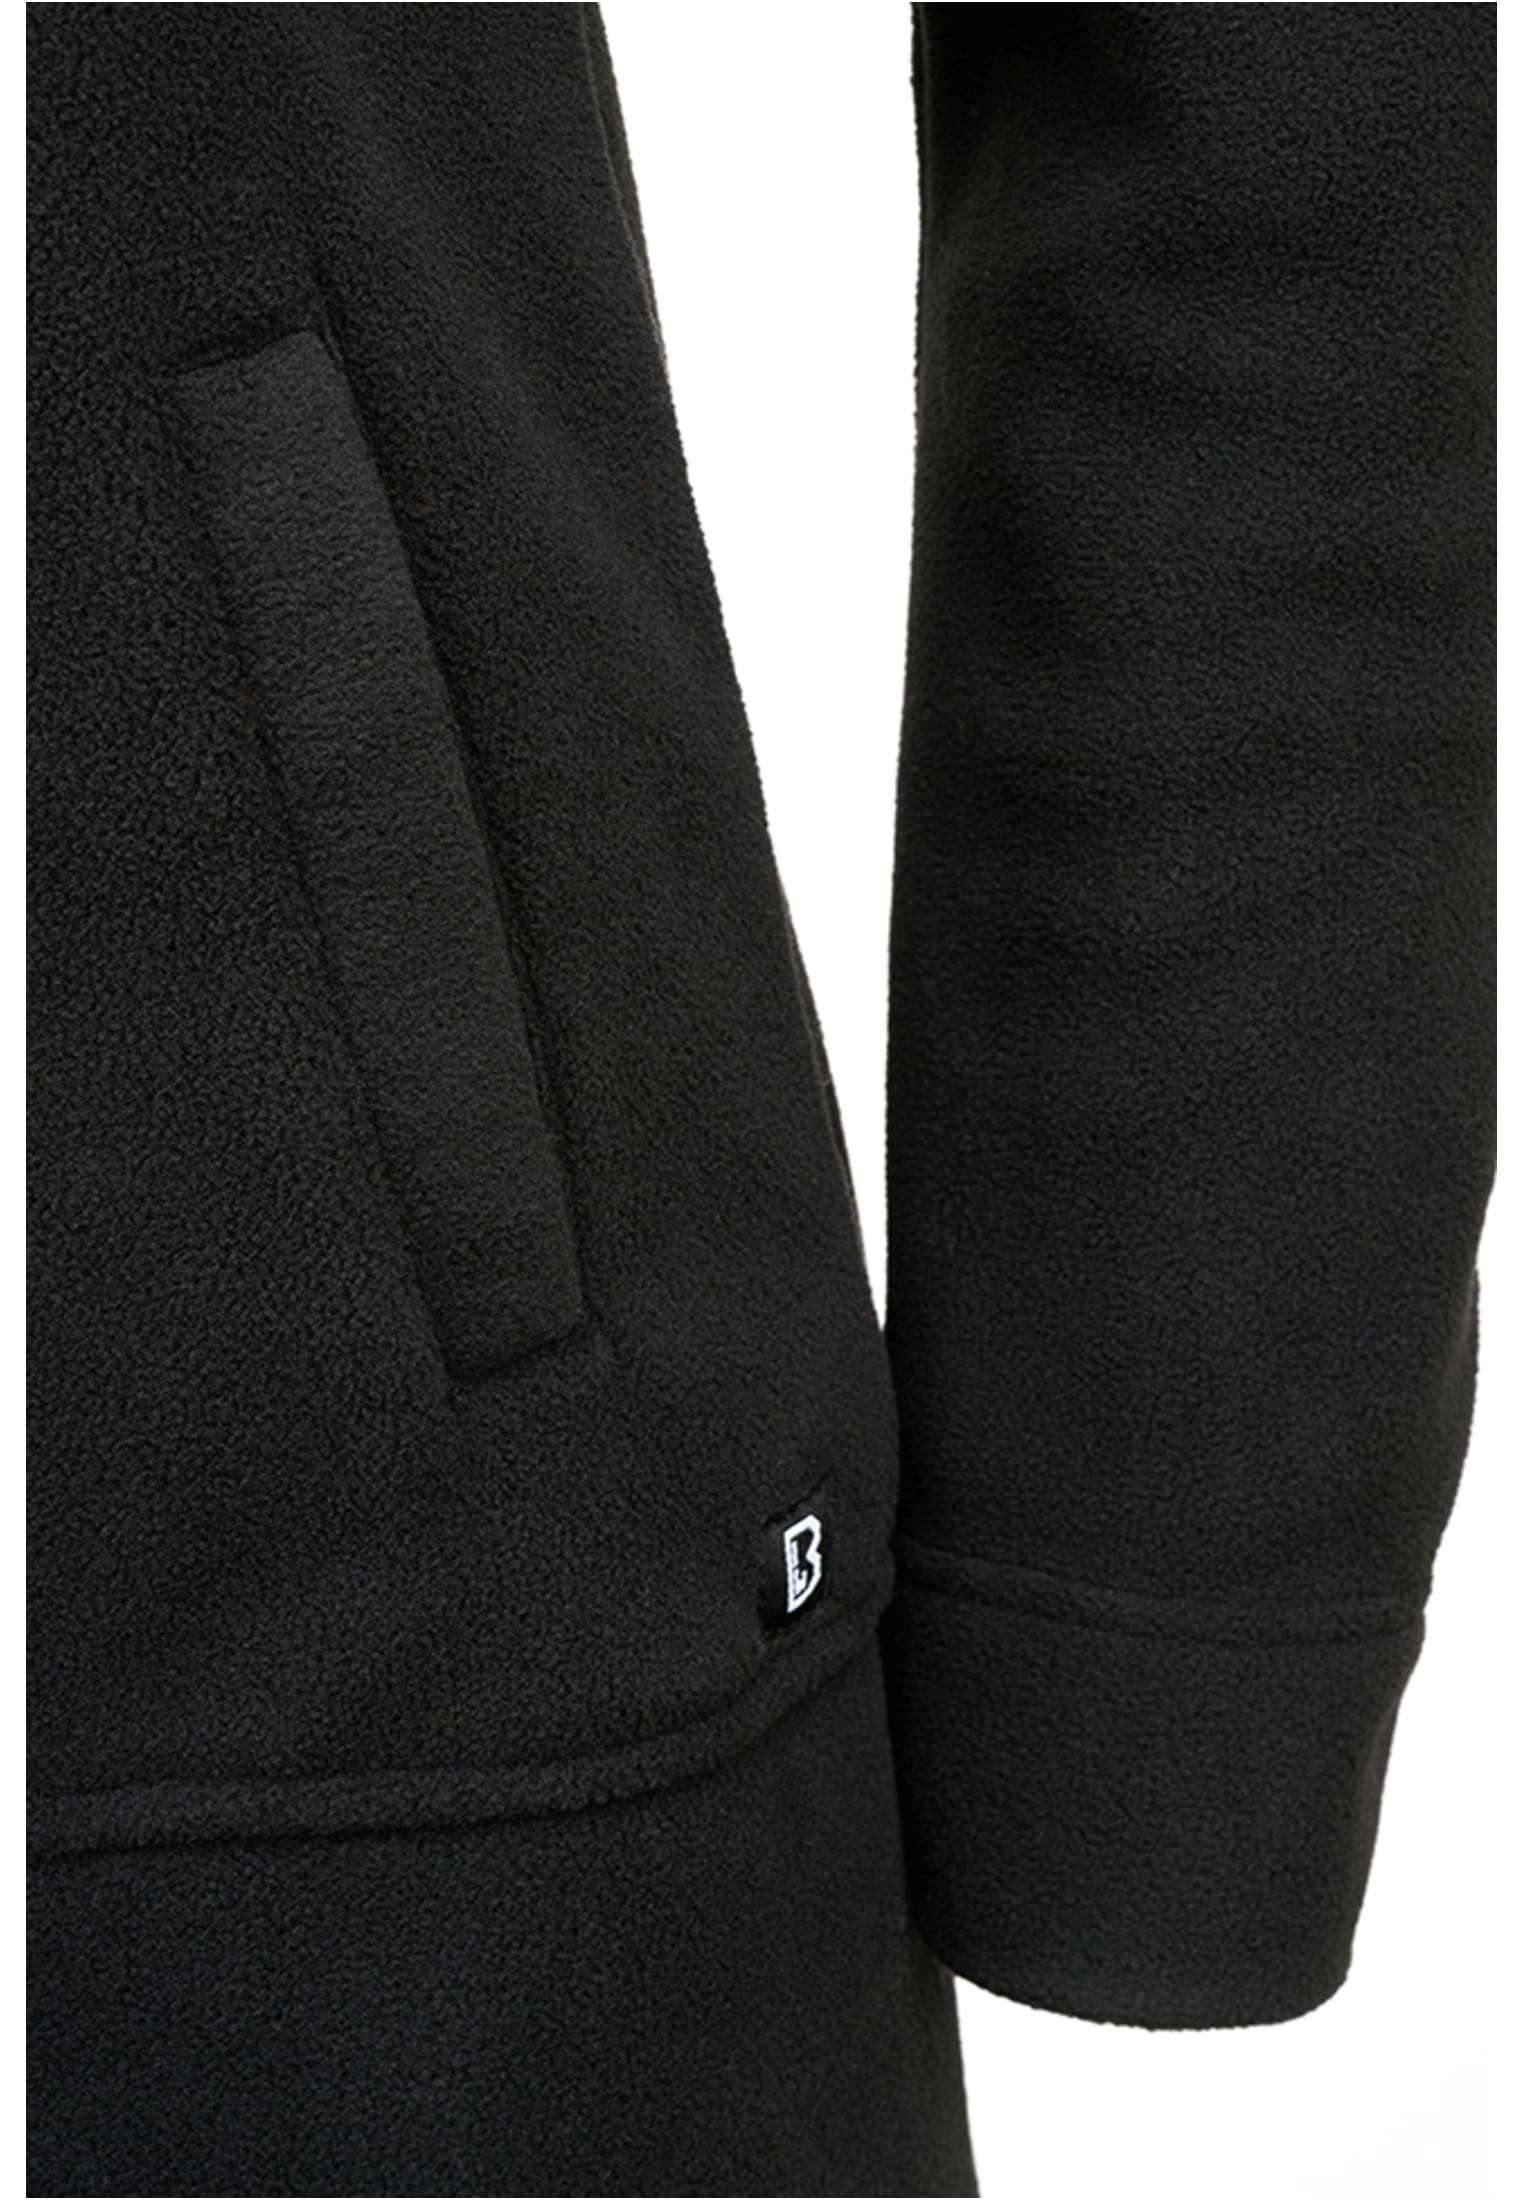 Brandit Women Square Fleece Jacket black (Farbe: black / Größe: S)